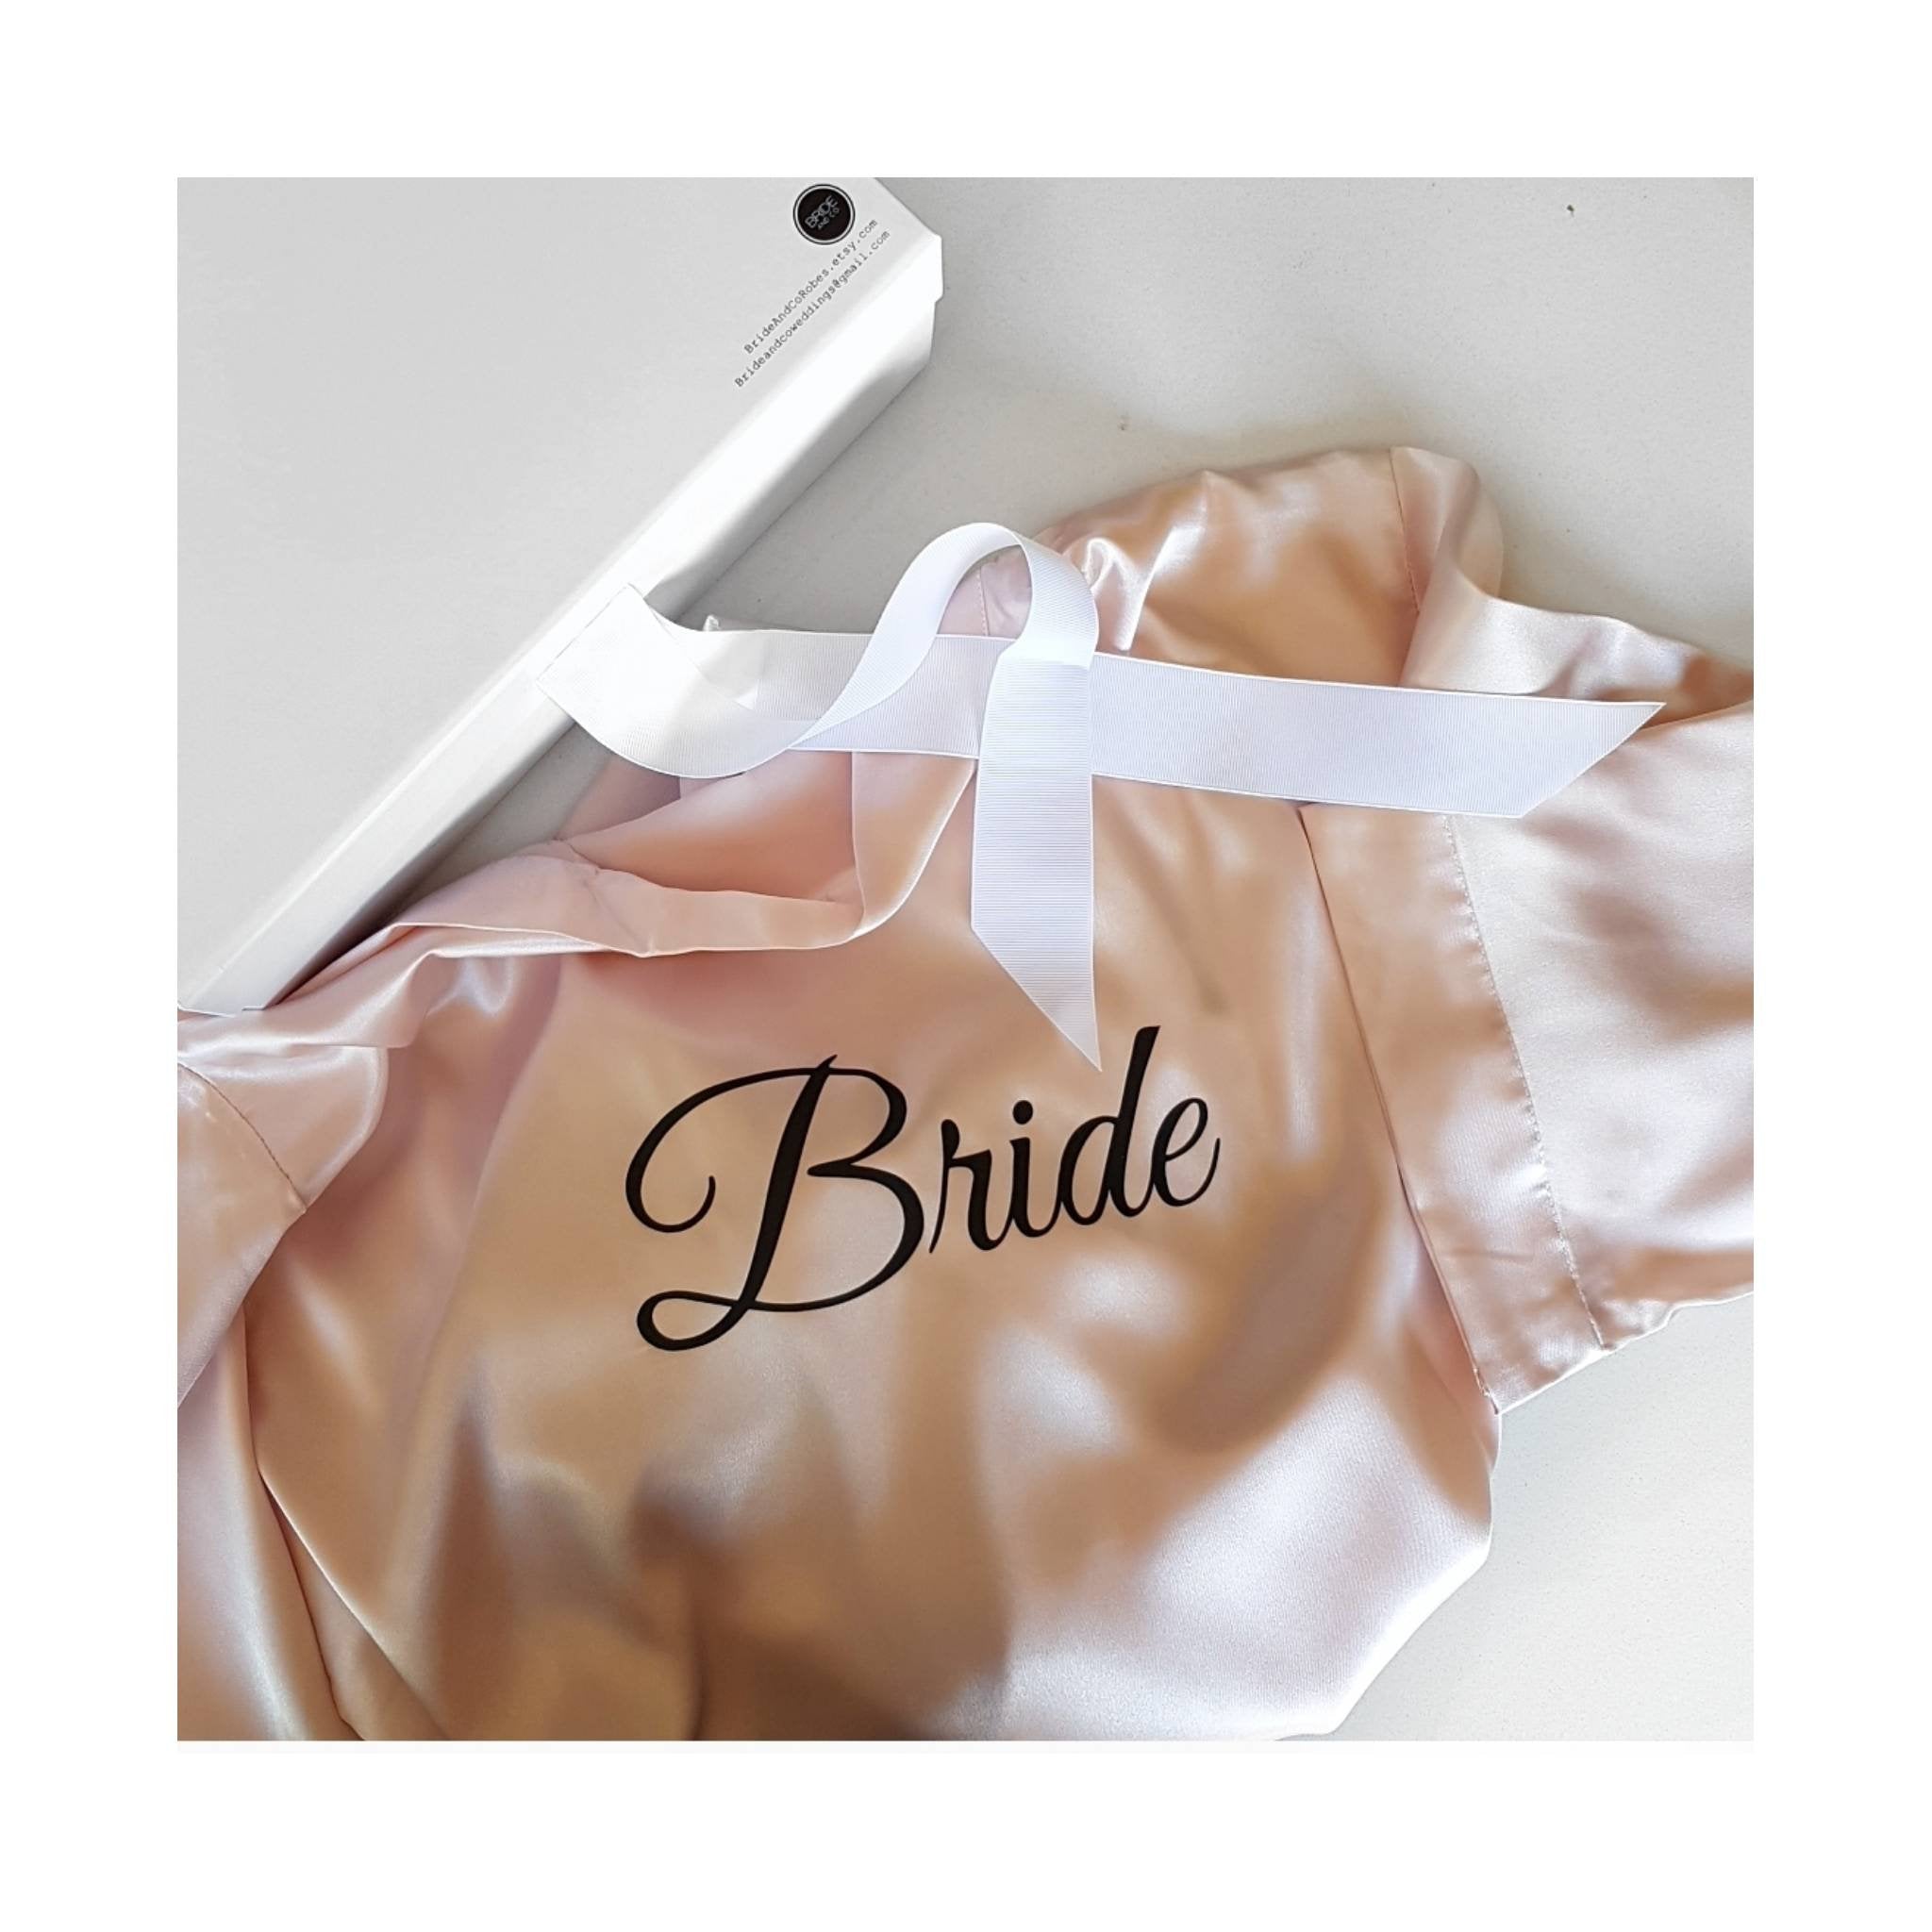 Bridal "Bride" Satin Robes